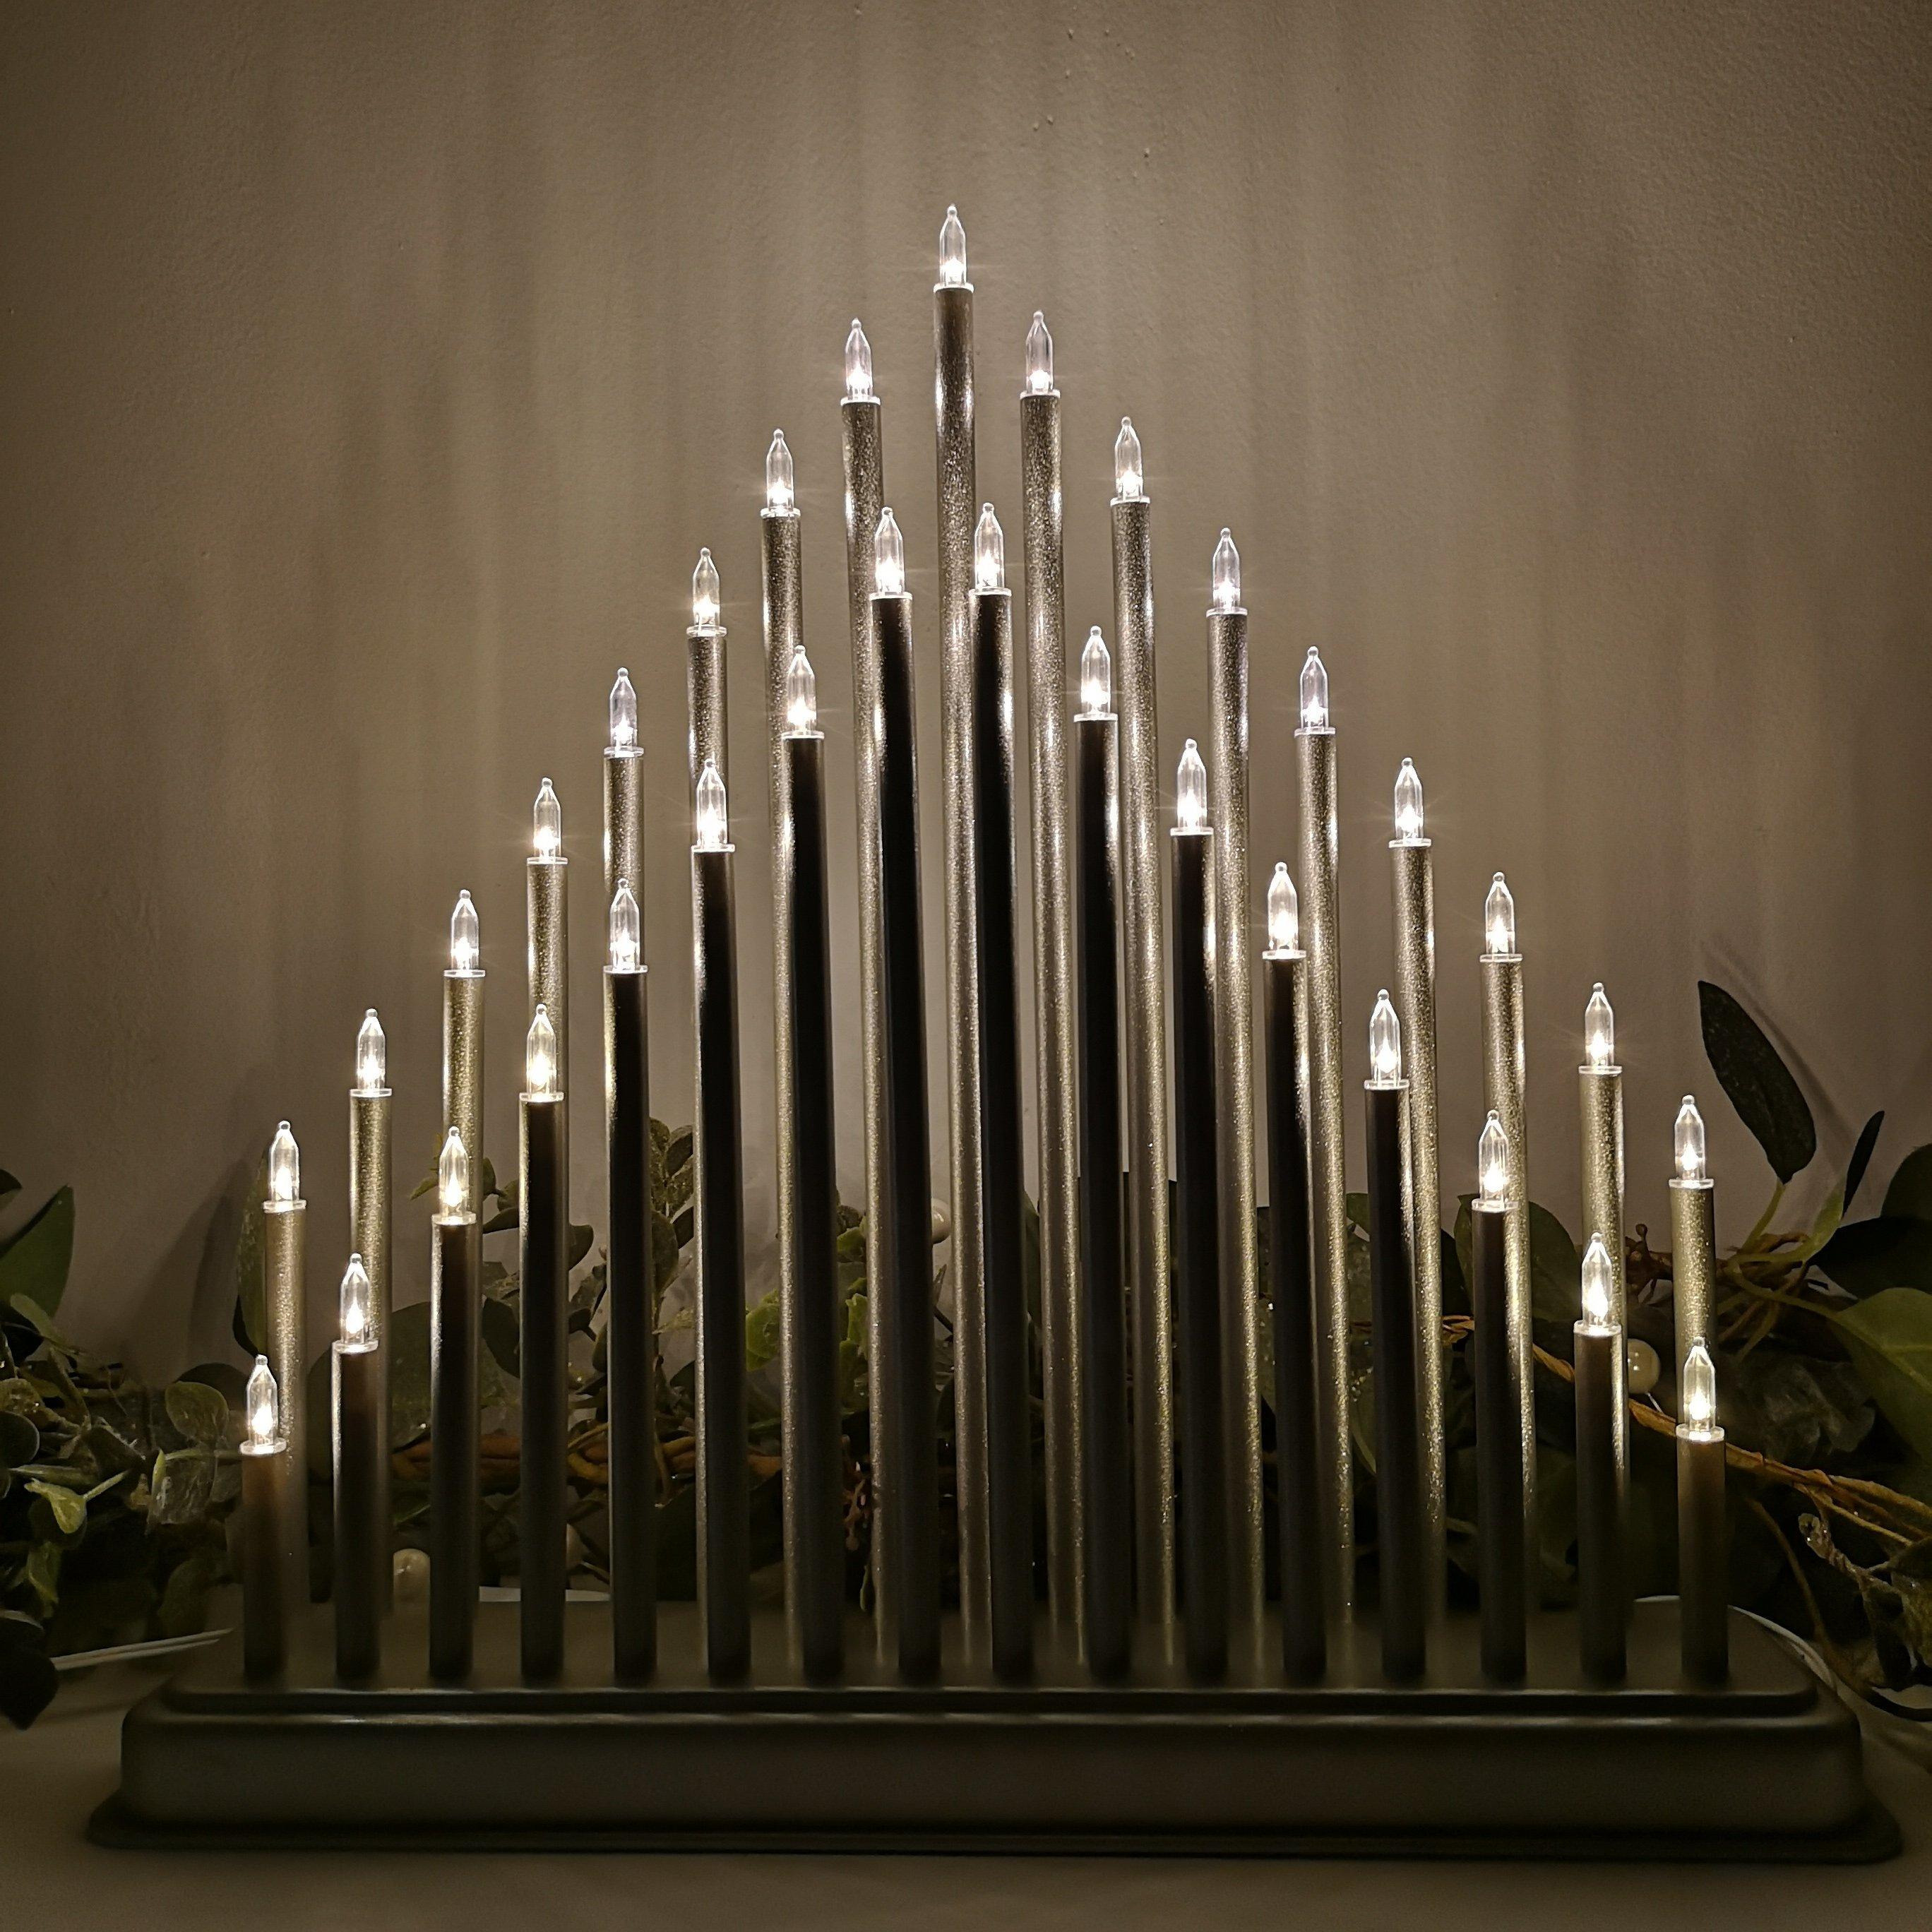 Premier 34cm Silver Lit Christmas Candlebridge with 33 Warm White LEDs - image 1